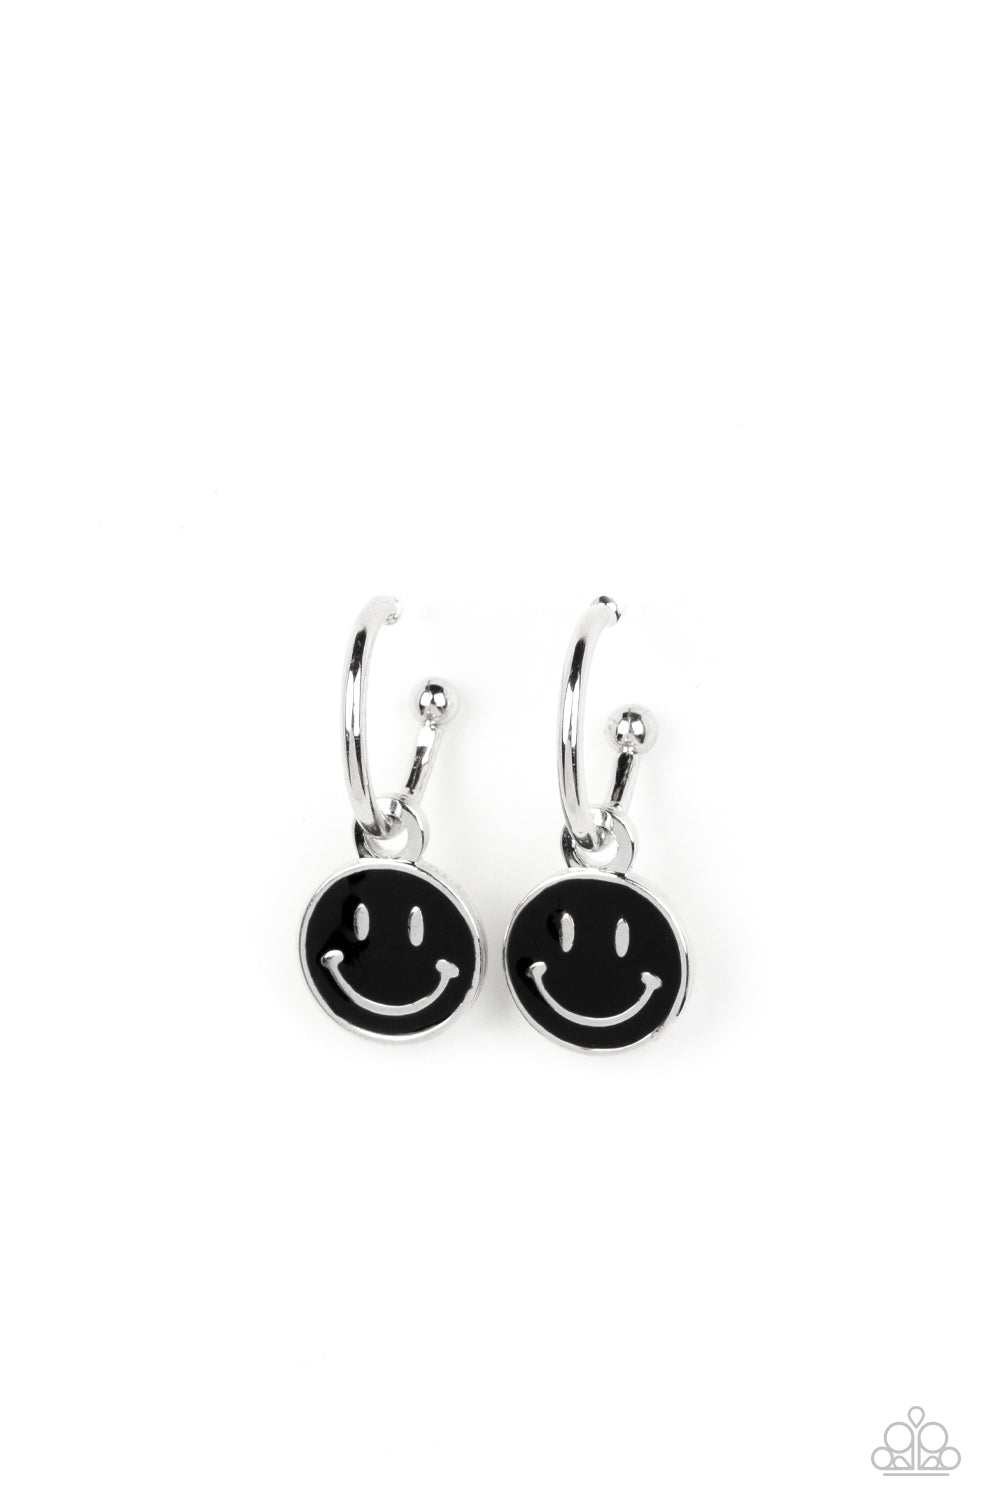 Subtle Smile - black - Paparazzi earrings